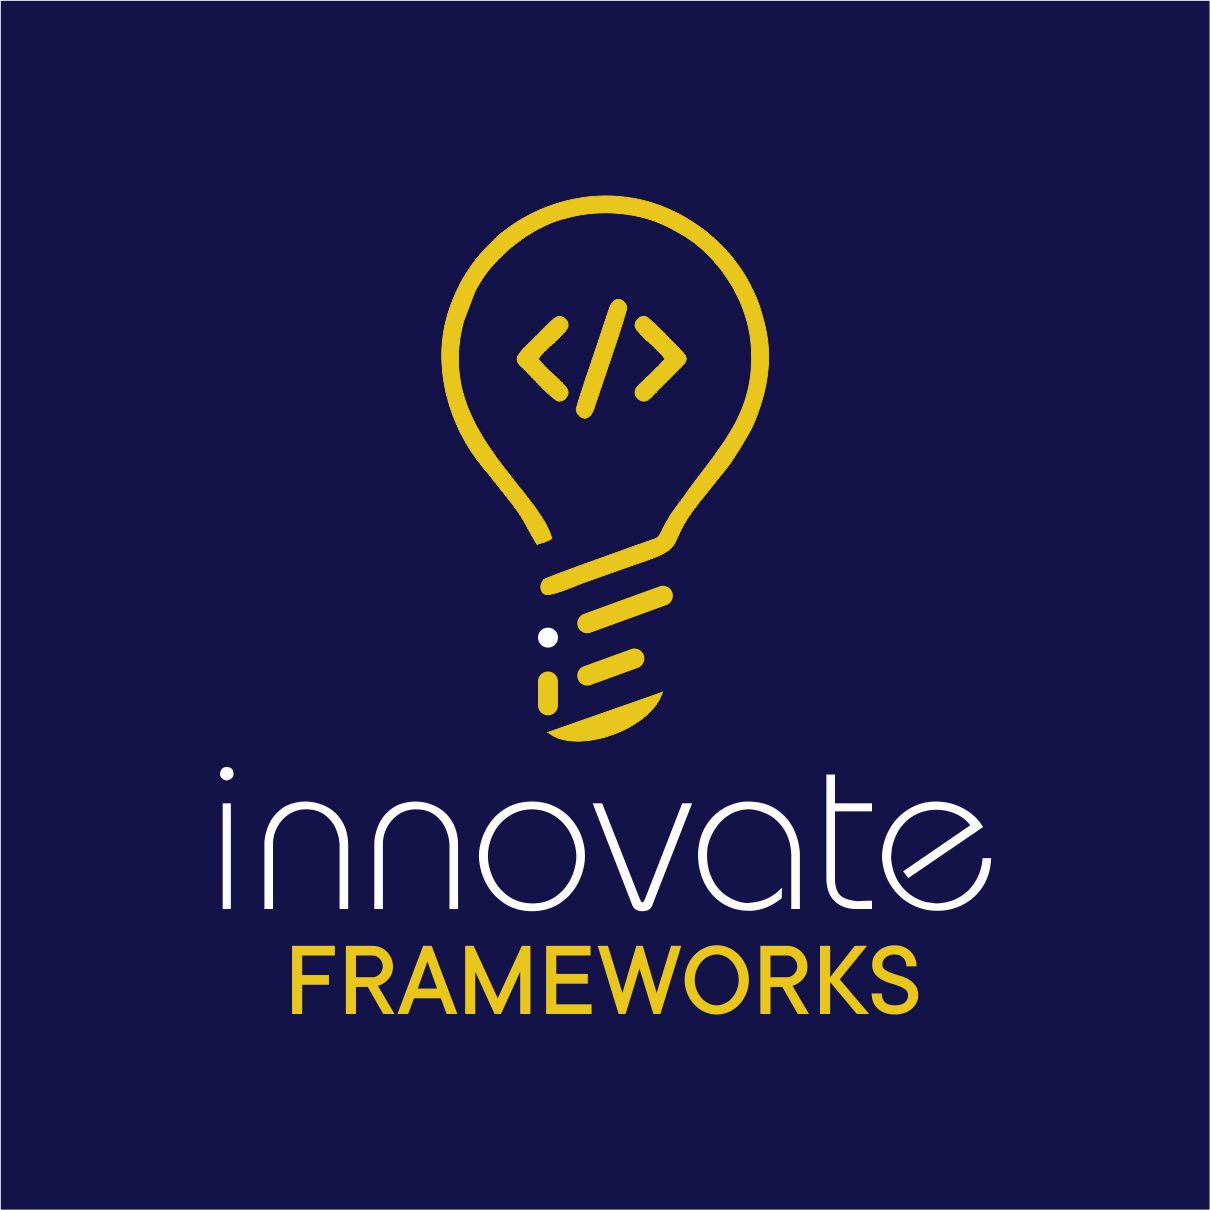 inovate frameworks2